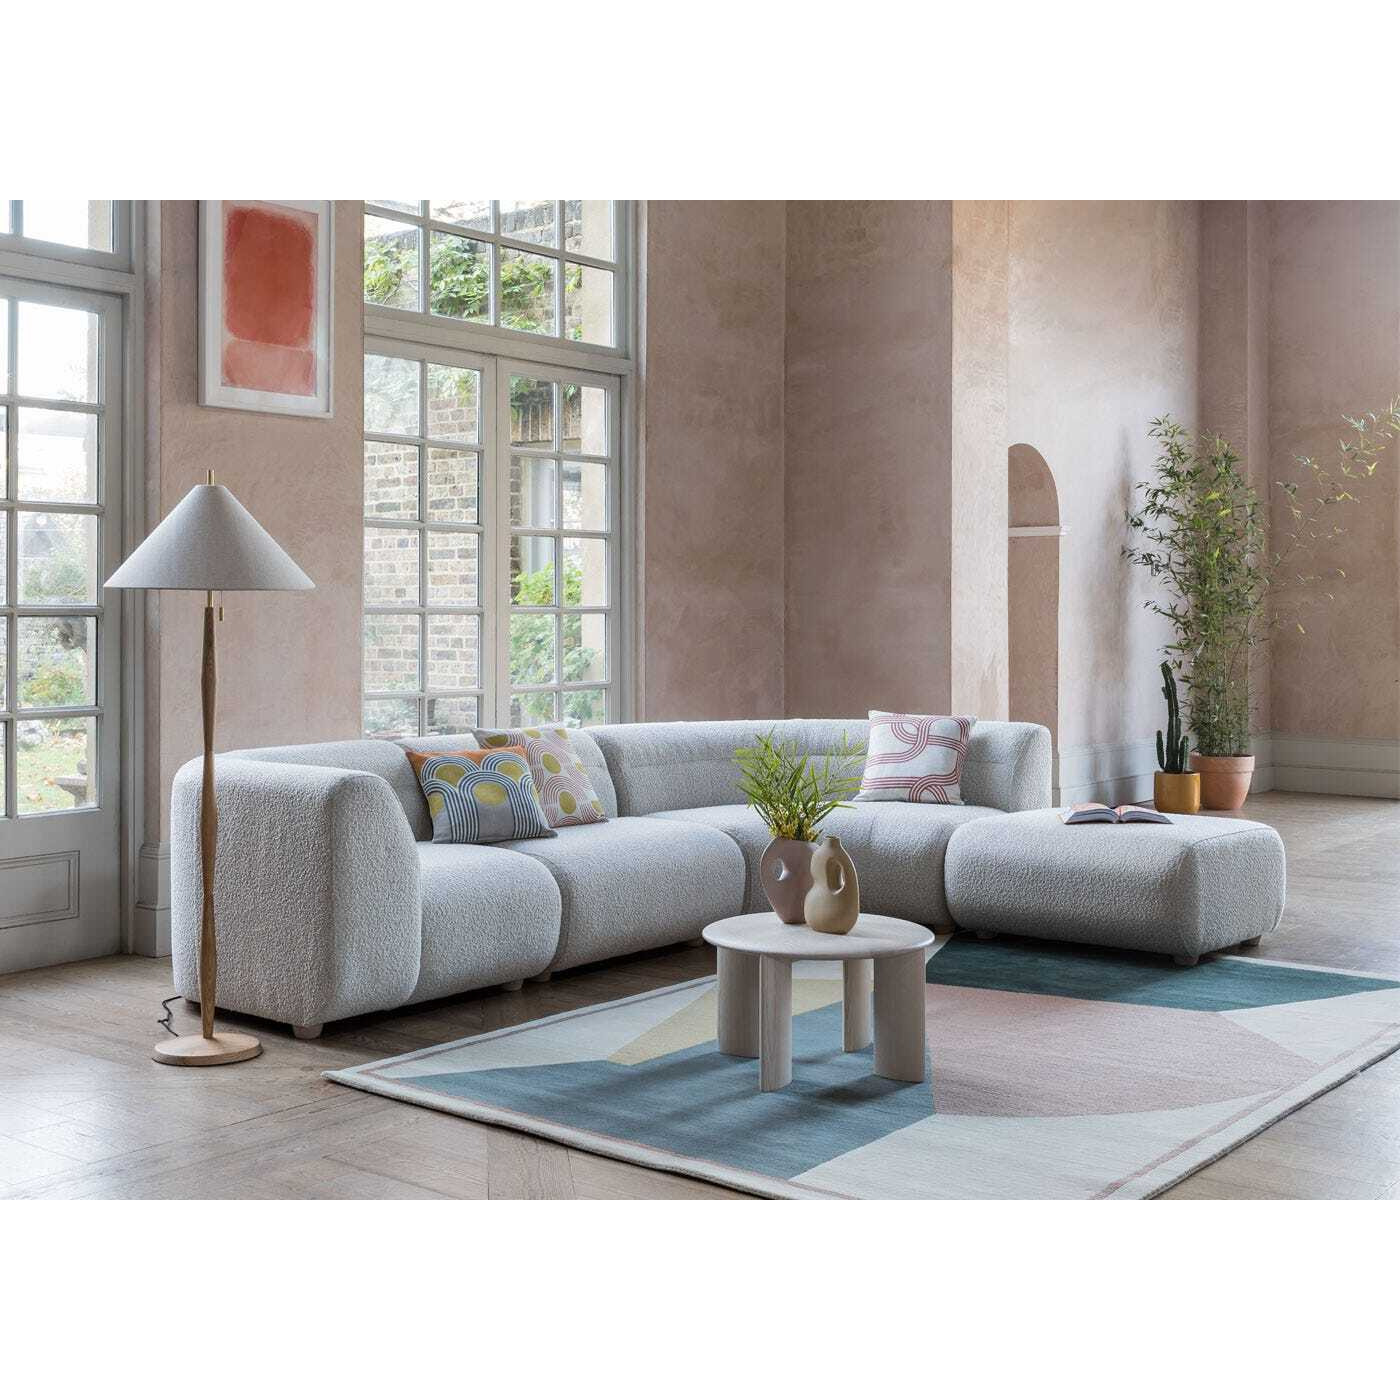 Heal's Lilli Left Hand Facing Curved Corner Sofa Smart Luxe Velvet Azure Natural Beech Feet